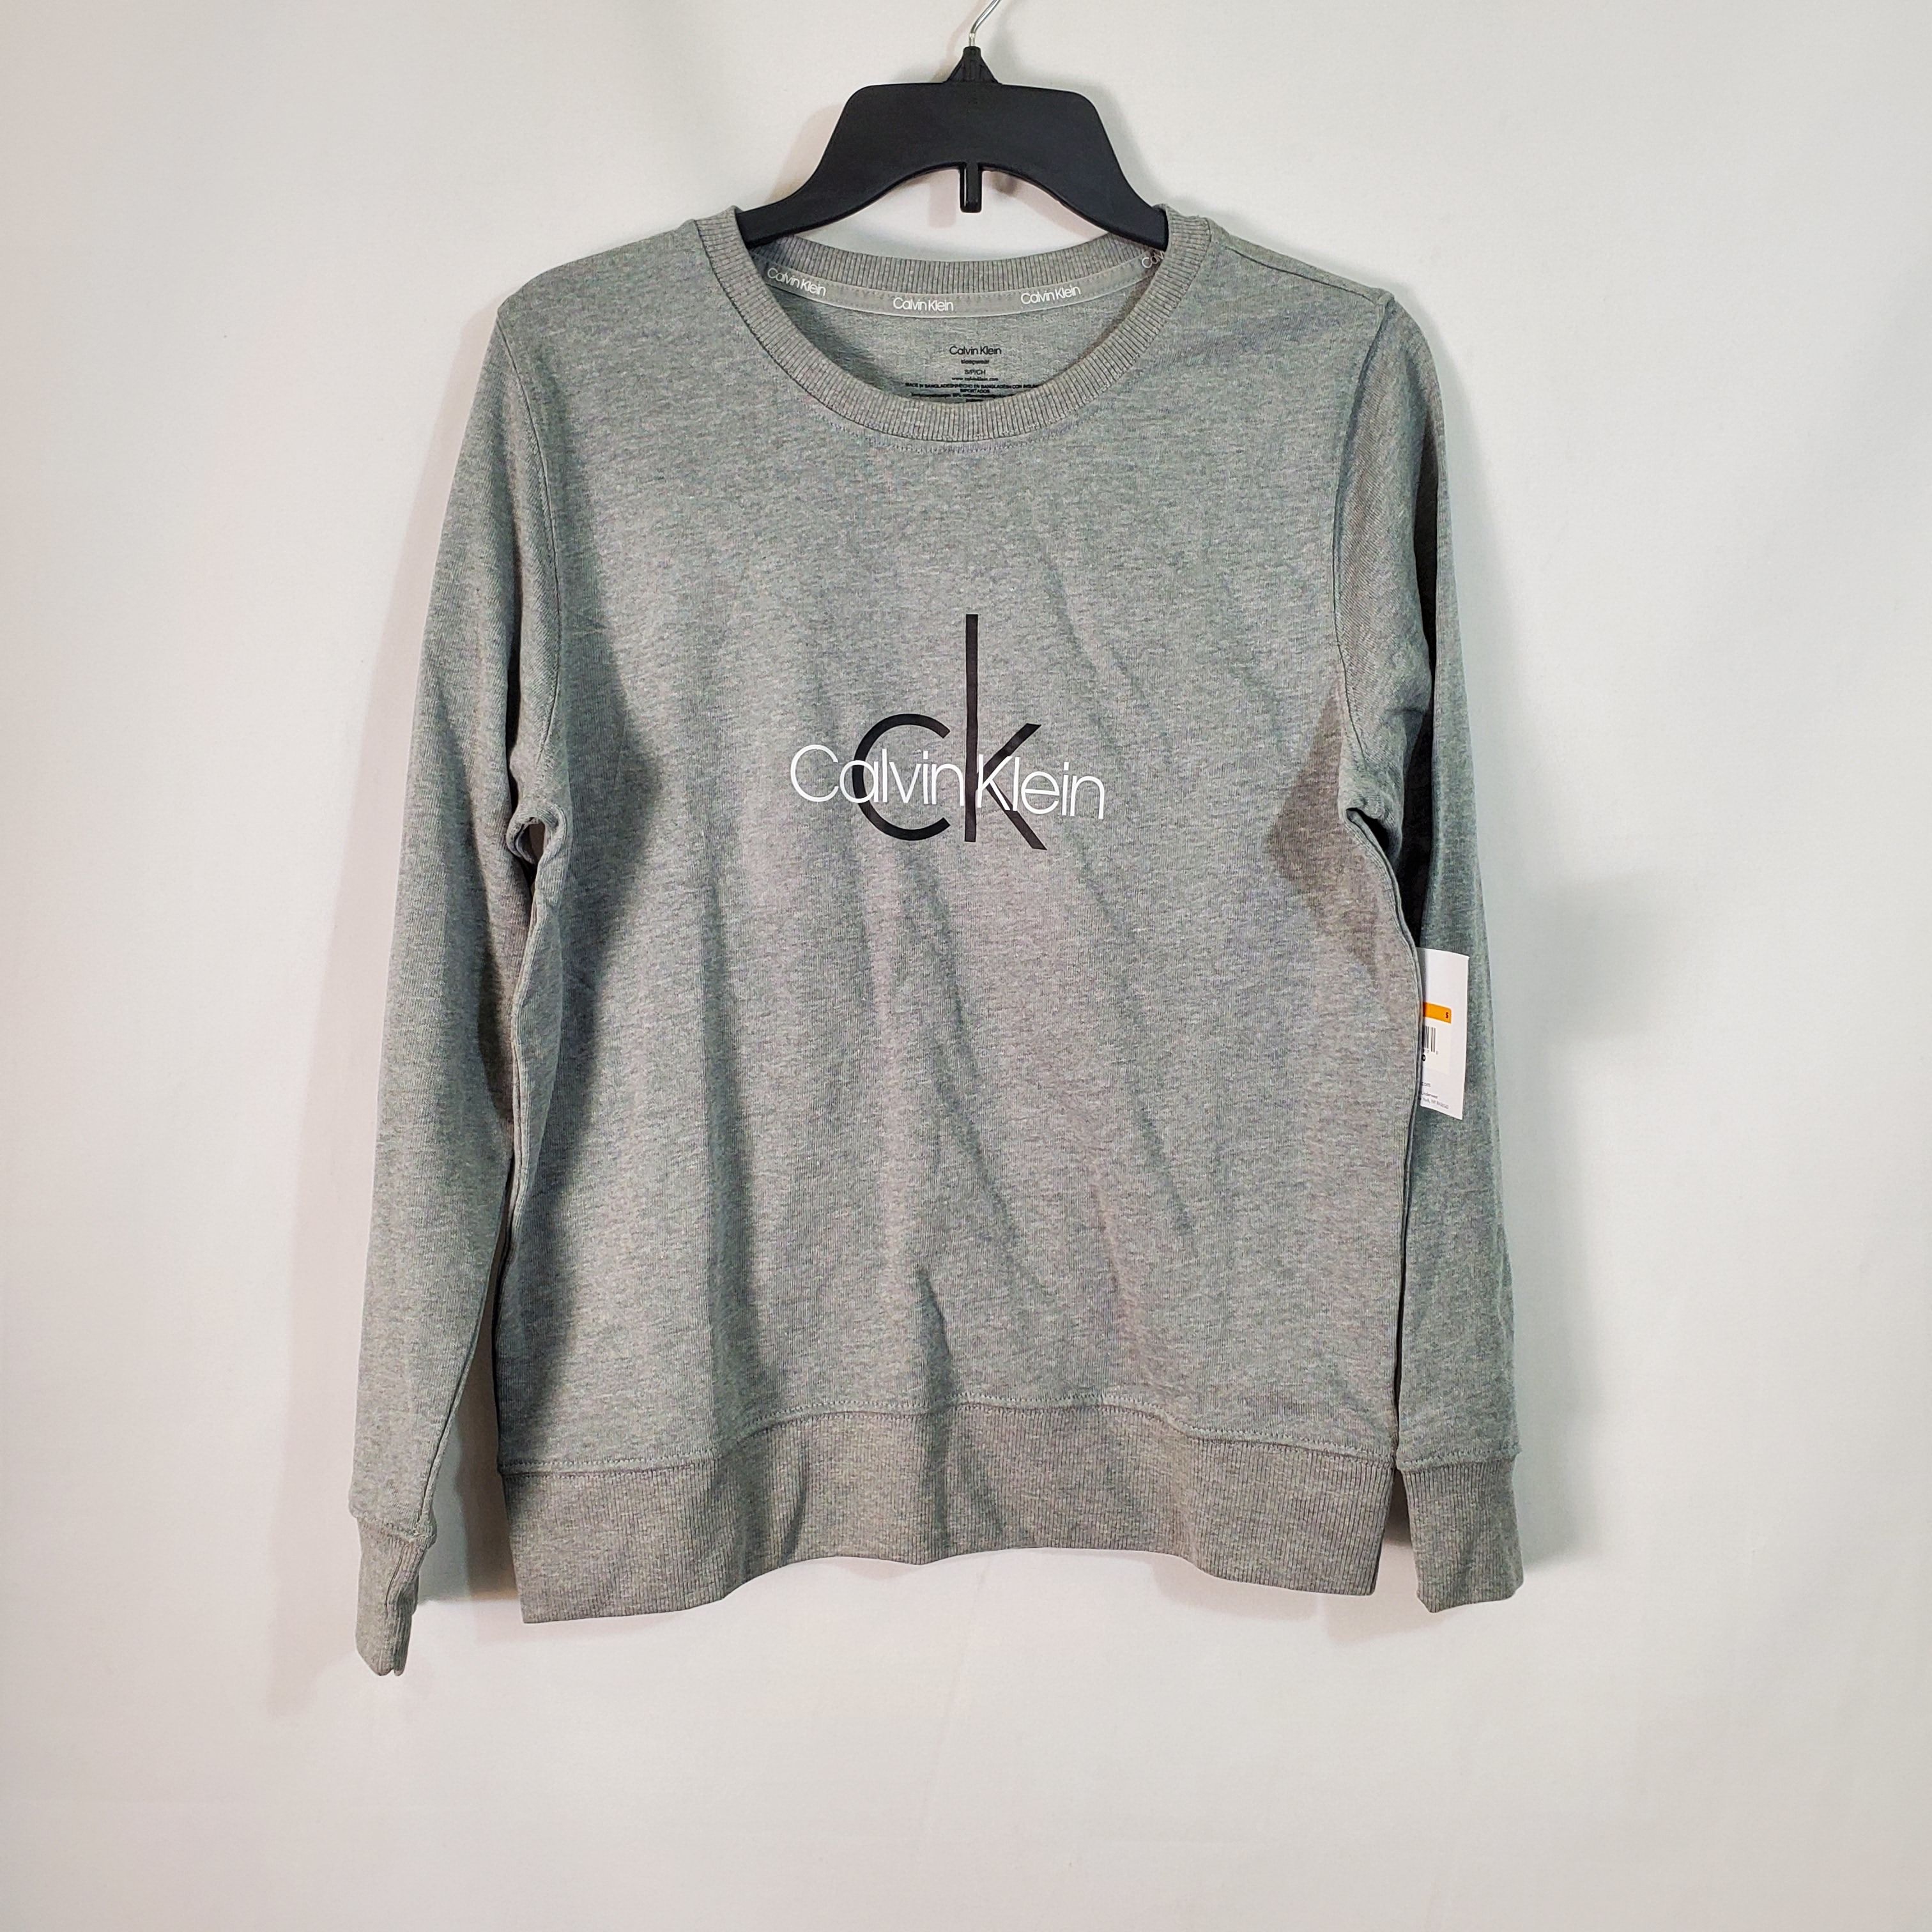 Buy the Women Sleepwear Klein GoodwillFinds Sweater NWT Grey | S Calvin